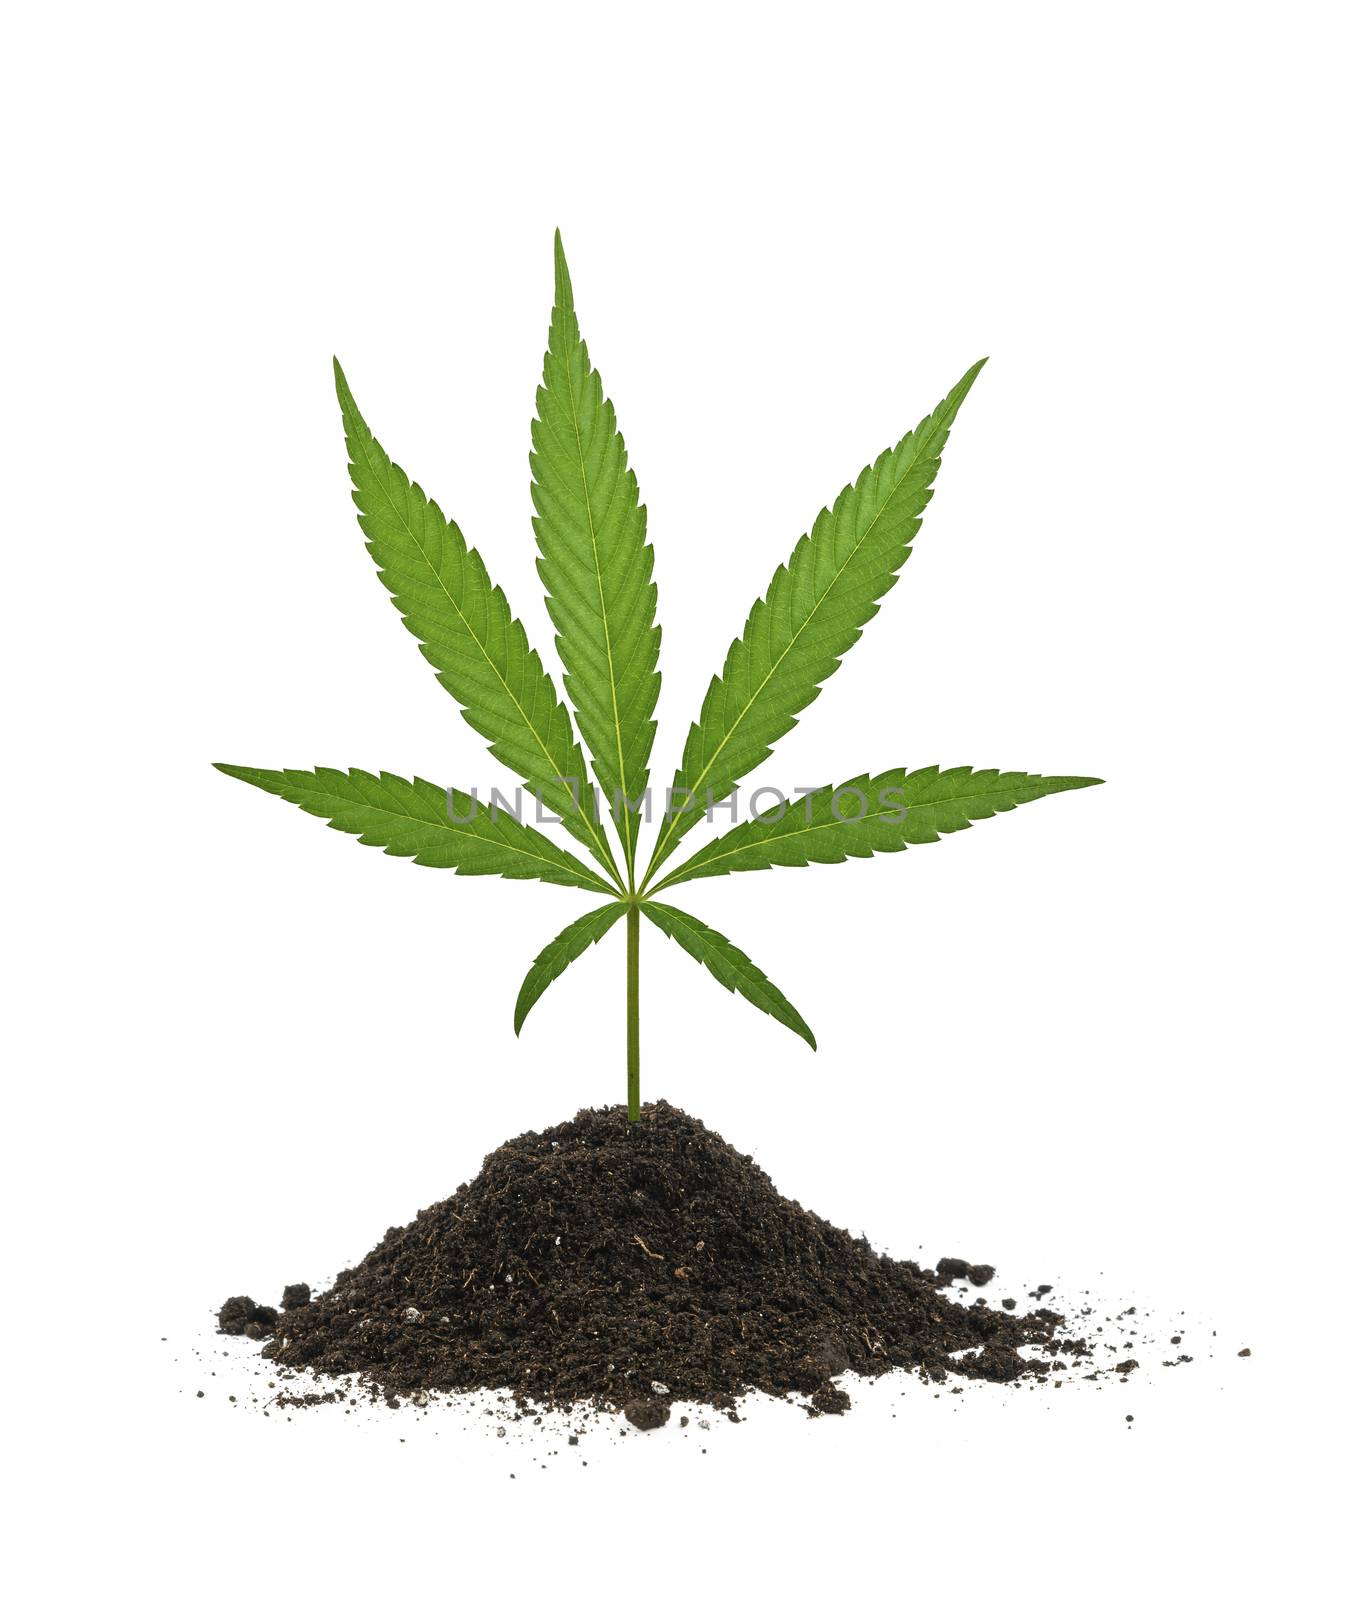 One fresh green cannabis leaf growing in soil by BreakingTheWalls